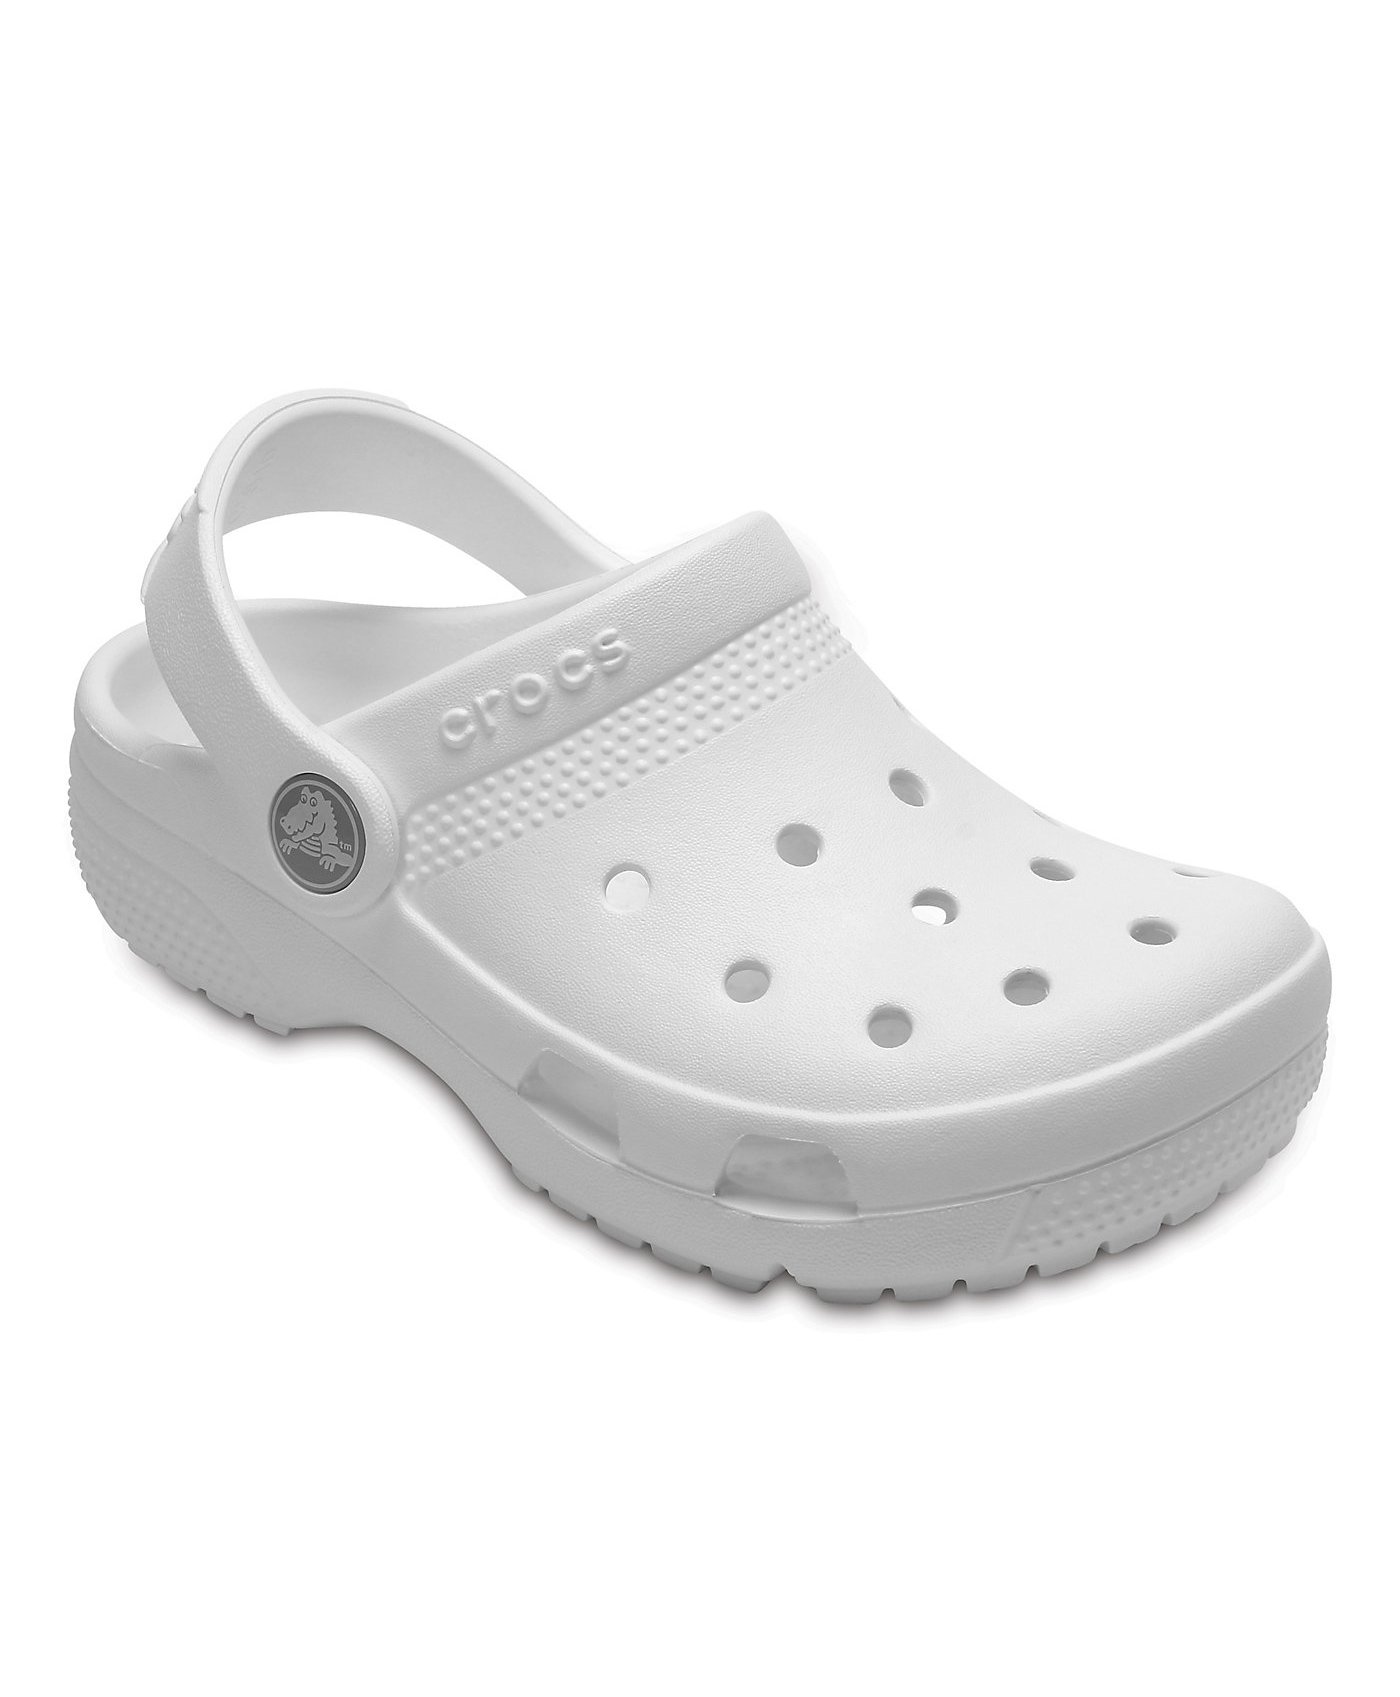 baby white crocs